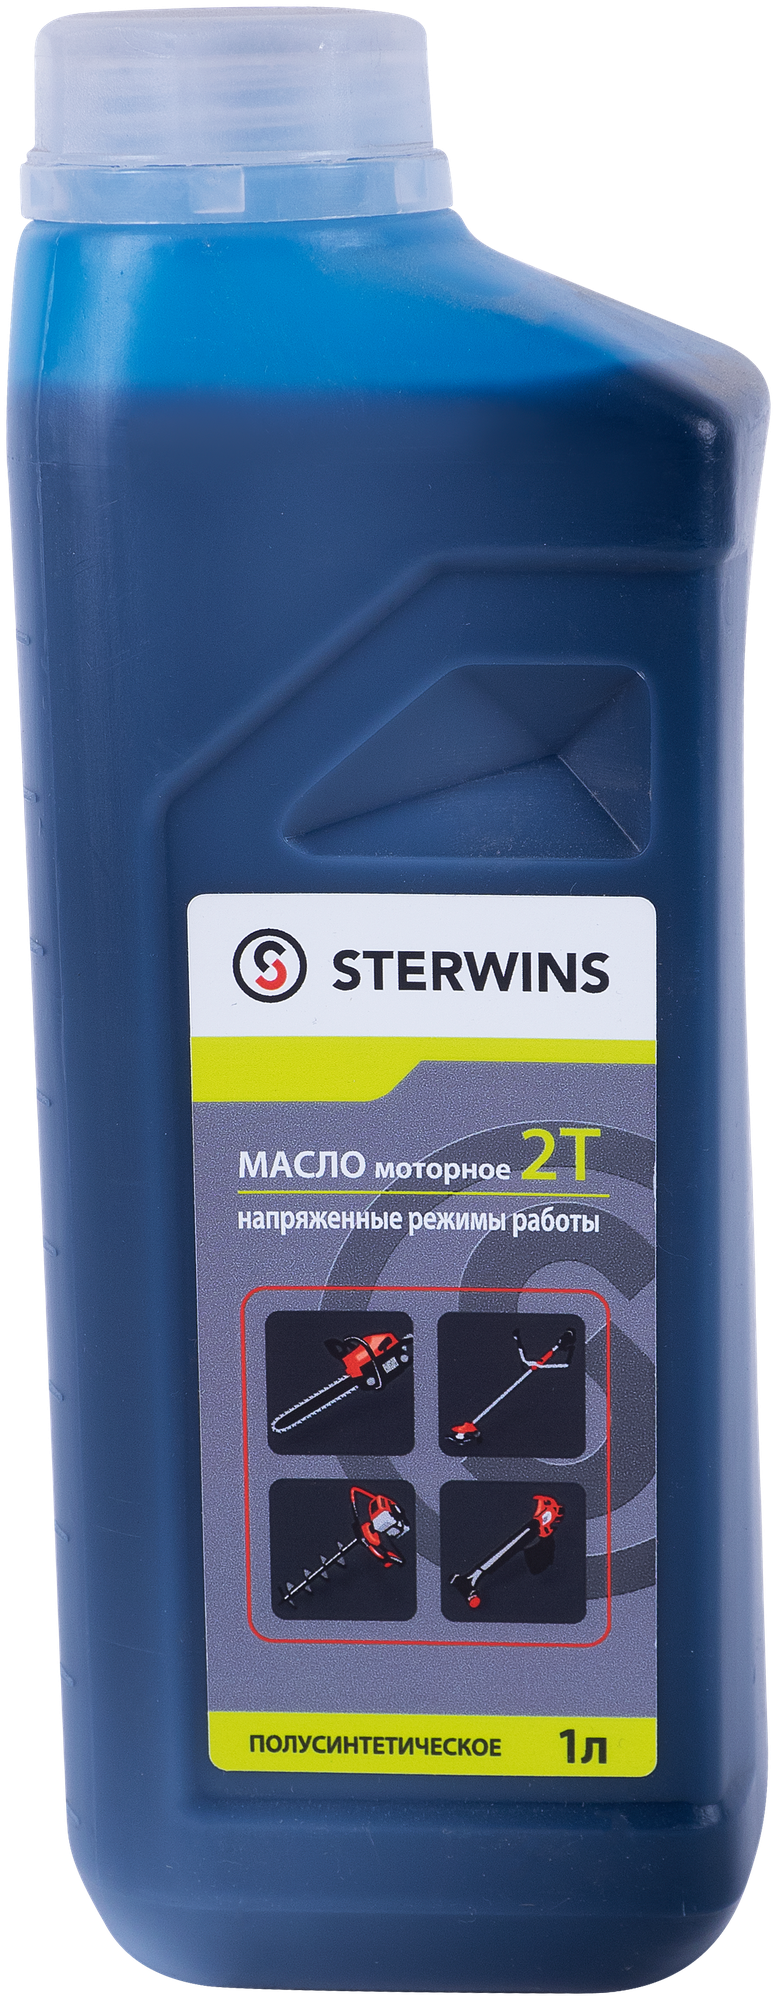 Масло моторное Sterwins 2Т для напряжённых режимов 1 л